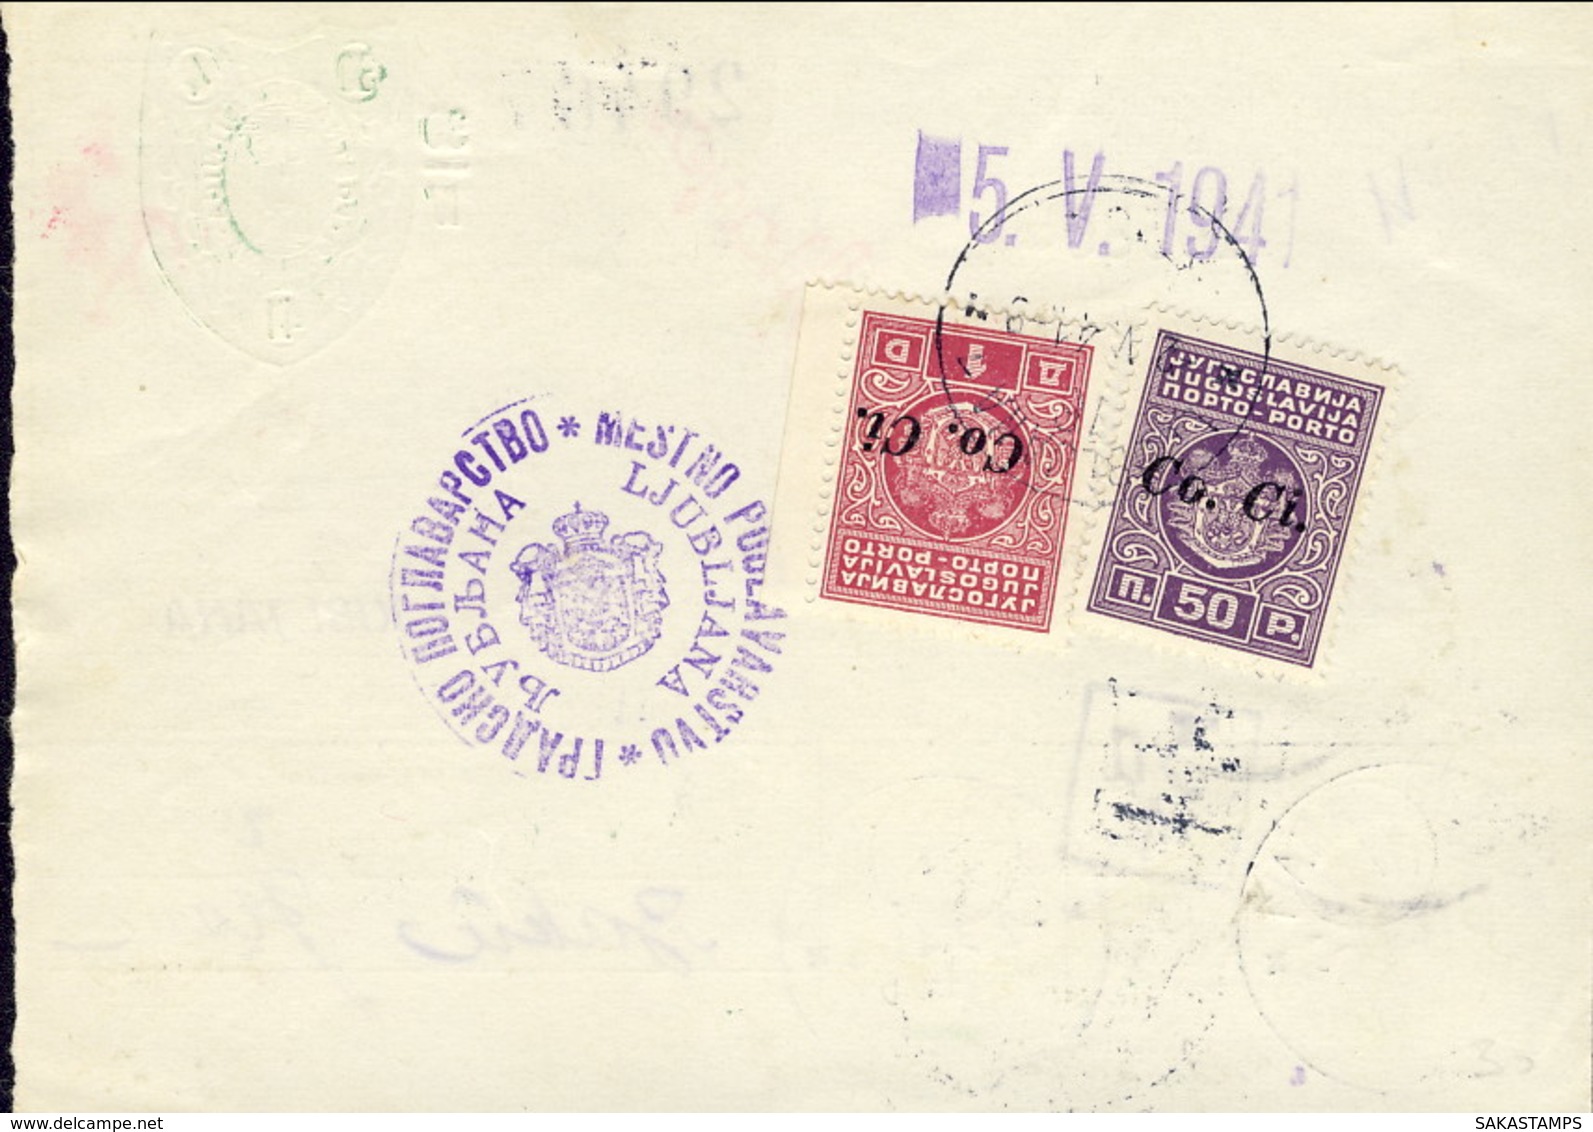 1941-Lubiana Vaglia Postale Con Segnatasse 50p.+1d.soprastampati "Co.Ci."da Ljubljana - Lubiana